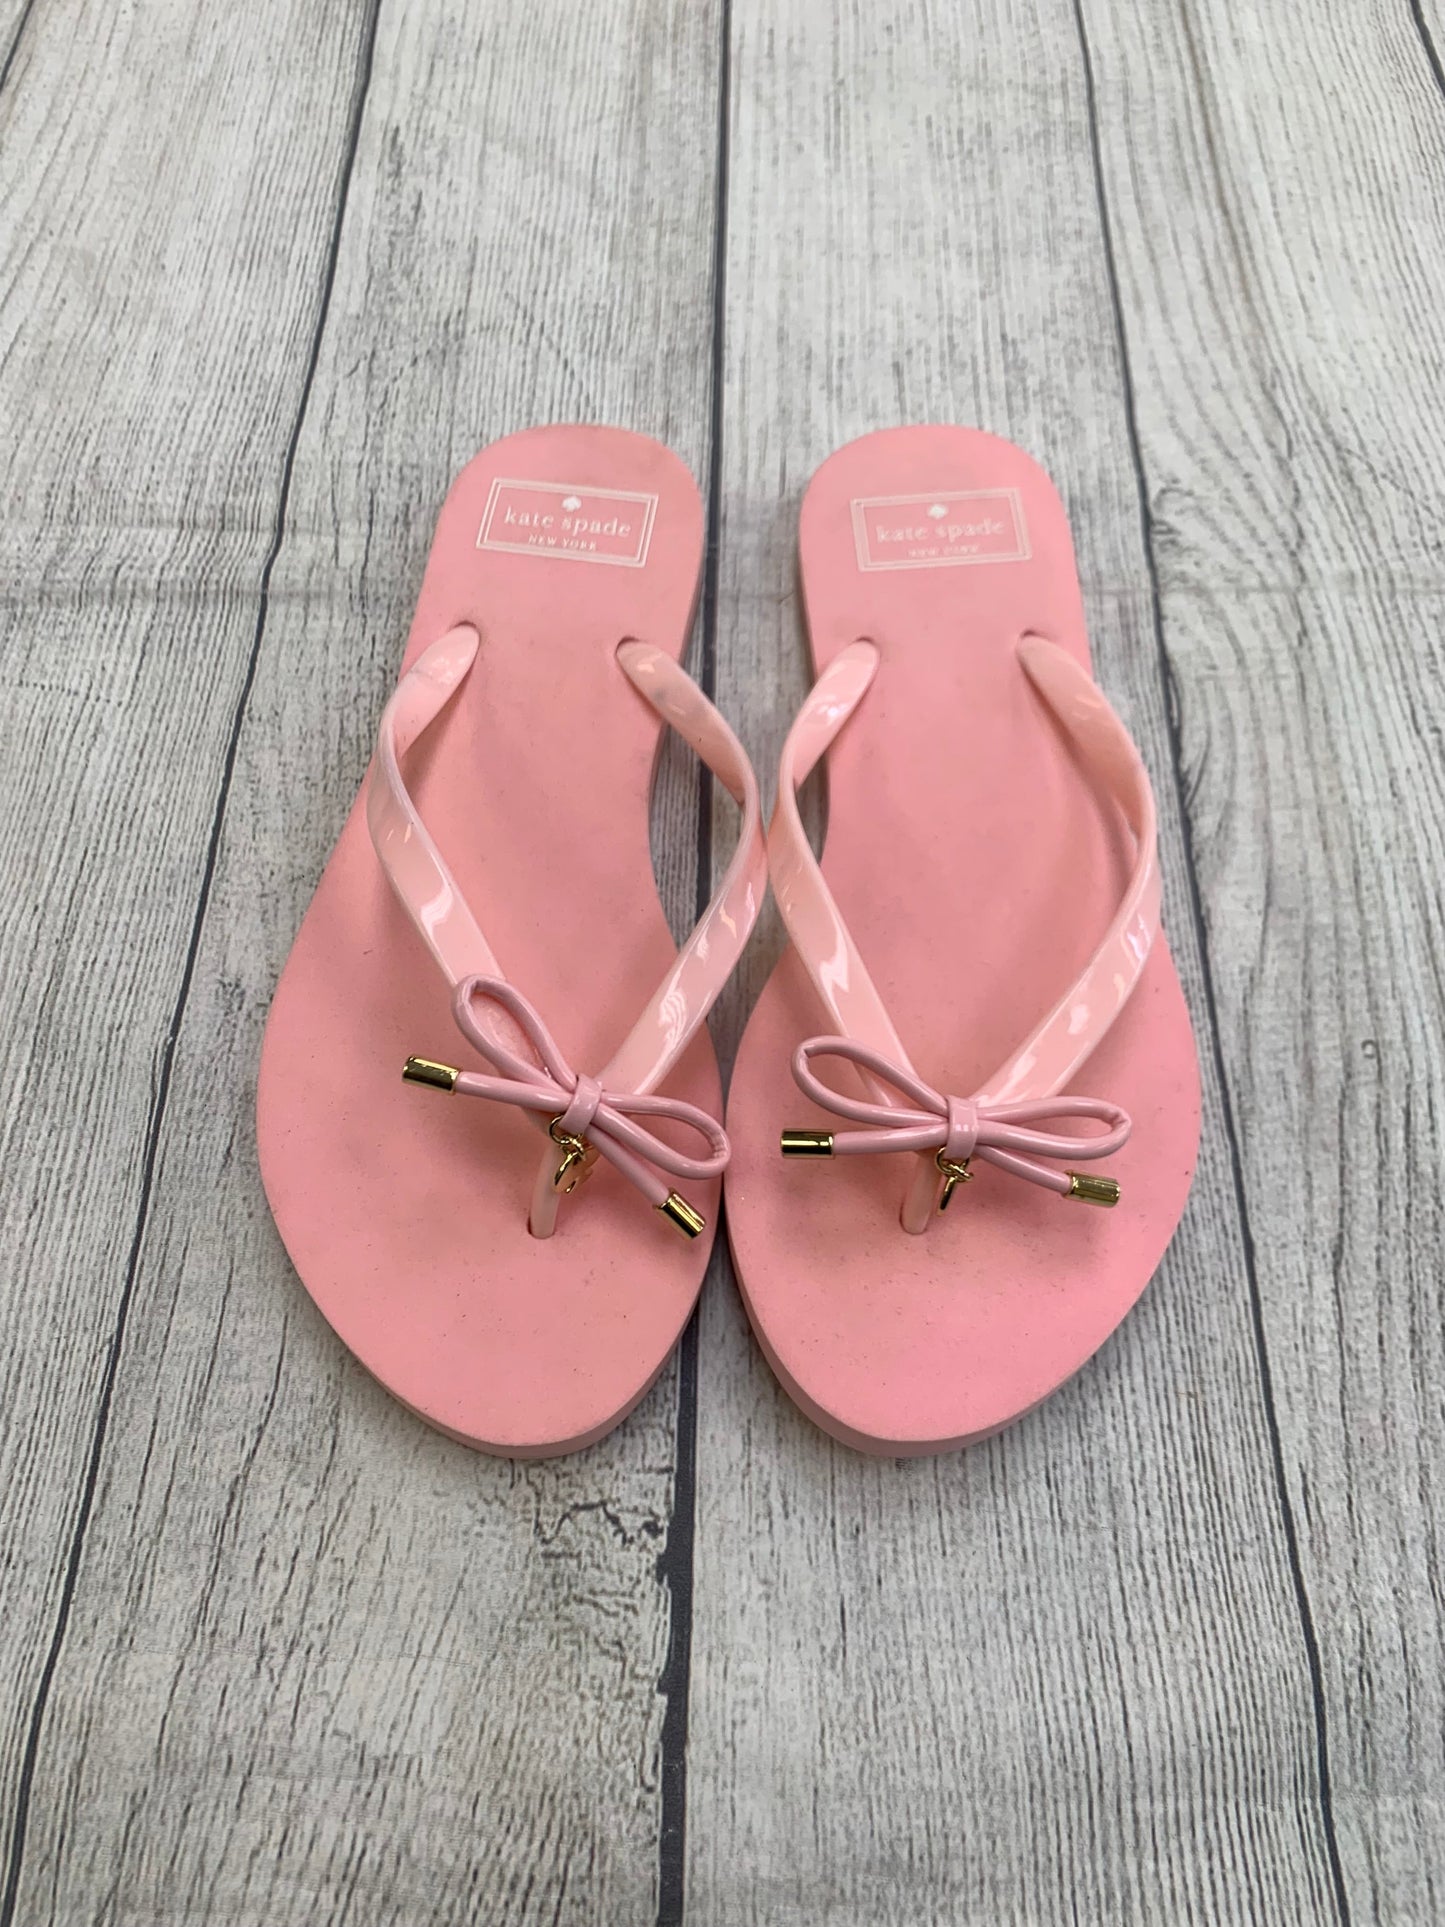 Sandals Flip Flops By Kate Spade  Size: 9